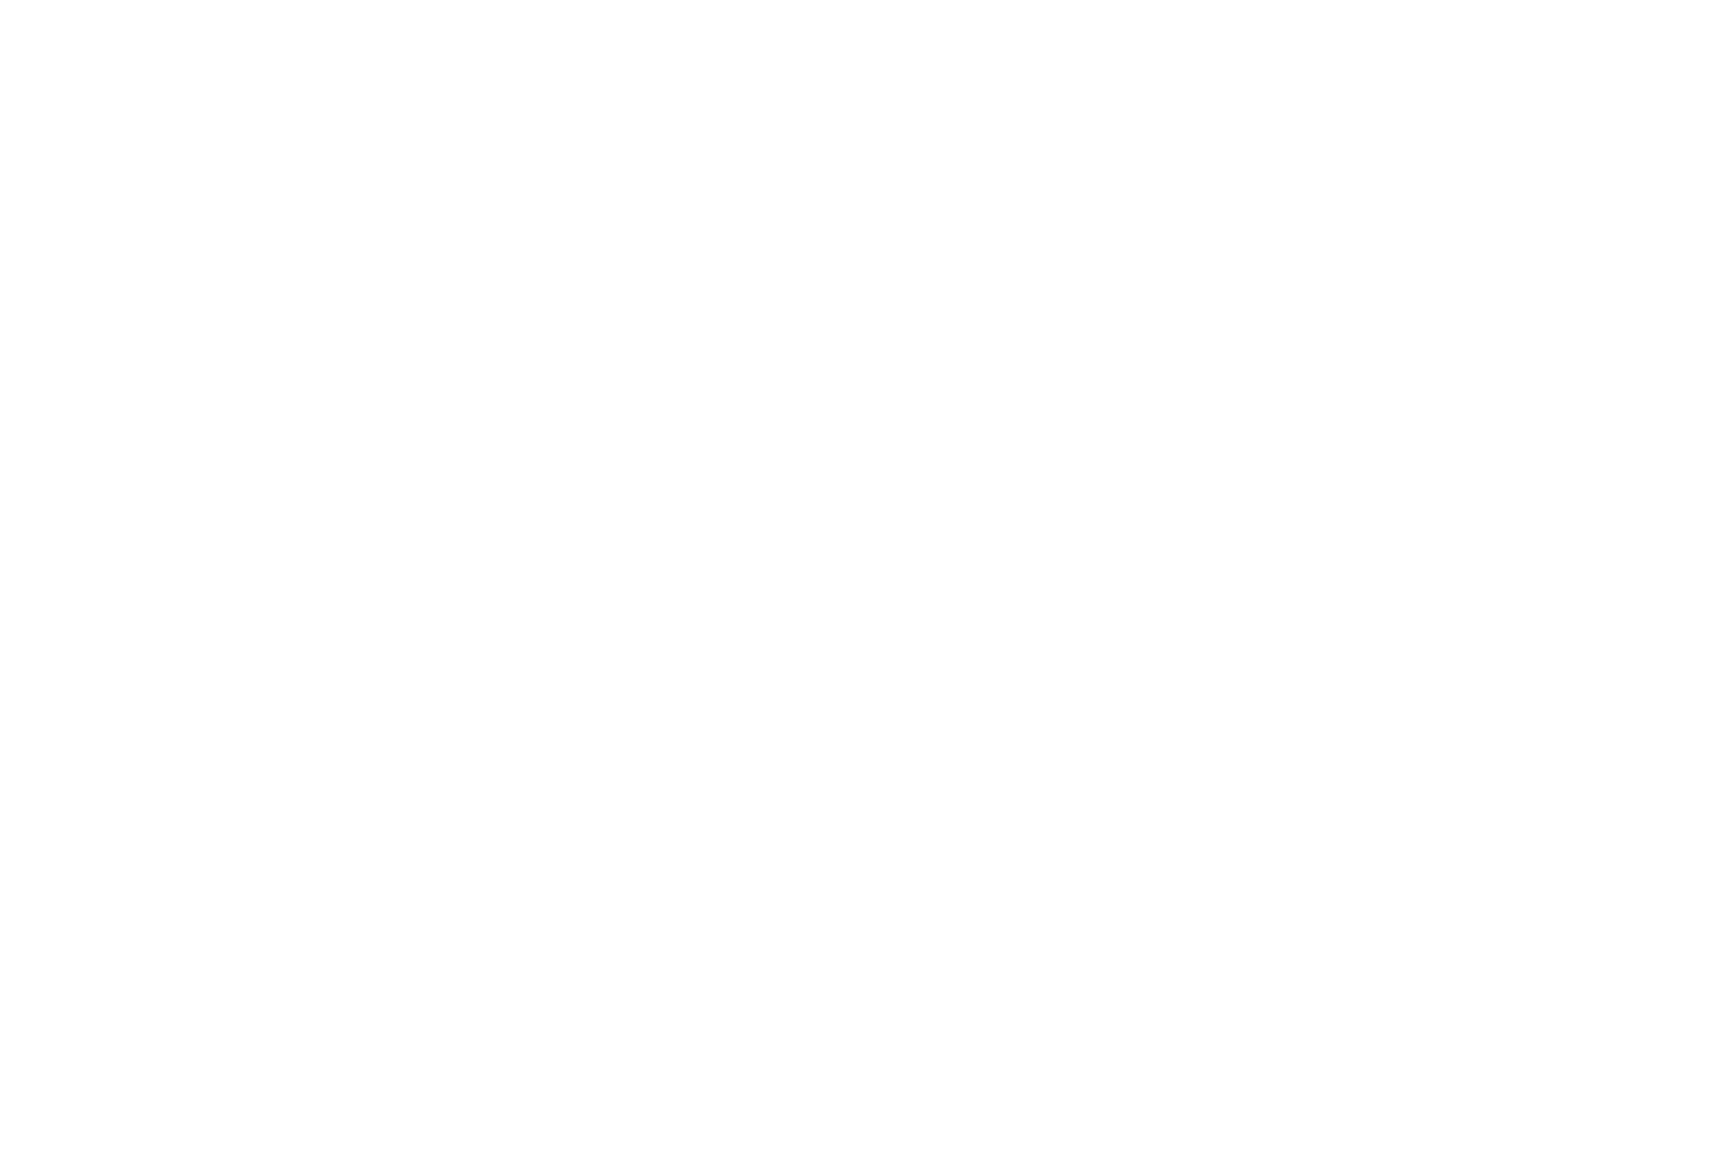 BEST CINEMATOGRAPHY - Independent Horror Movie Awards - 2019